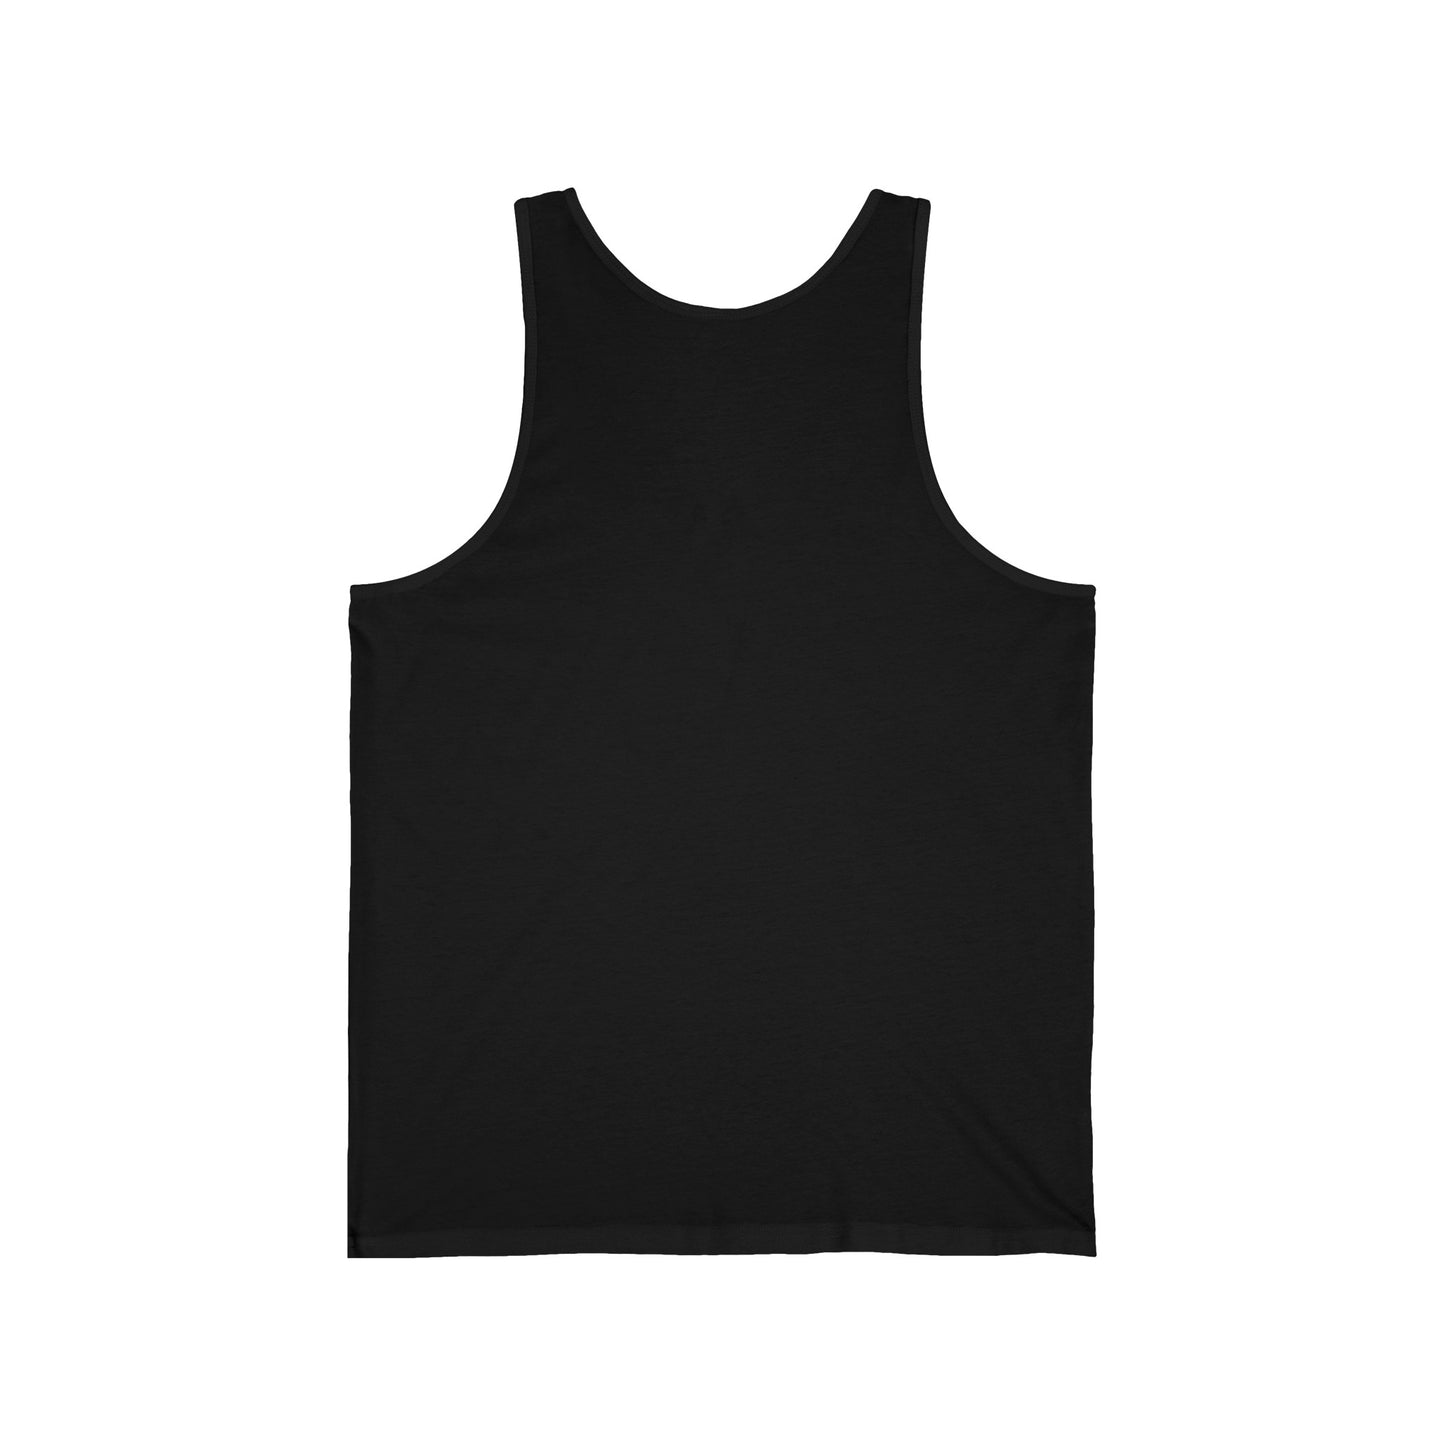 Illuminatty Tank Top - Funny Natty Gym Tanks Black Sleeveless Workout Shirts